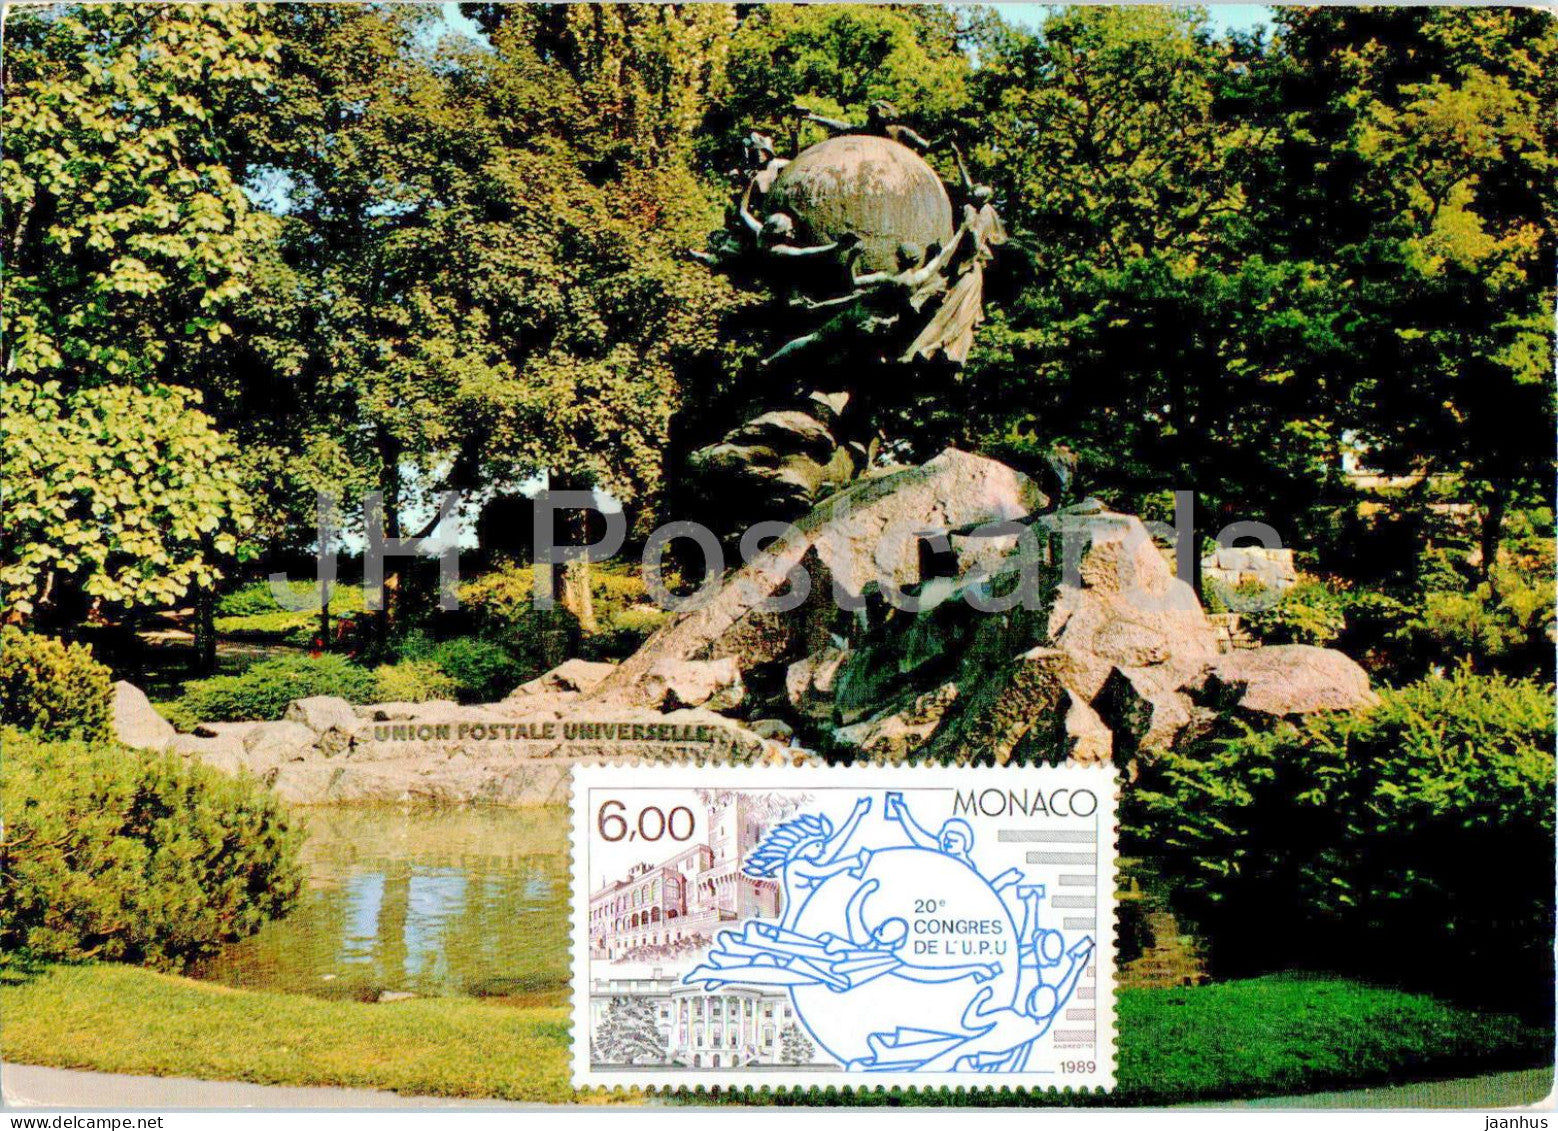 Bern - Berne - Weltpostdenkmal - Monument of the Universal Post Union - 3546 - Switzerland - unused - JH Postcards